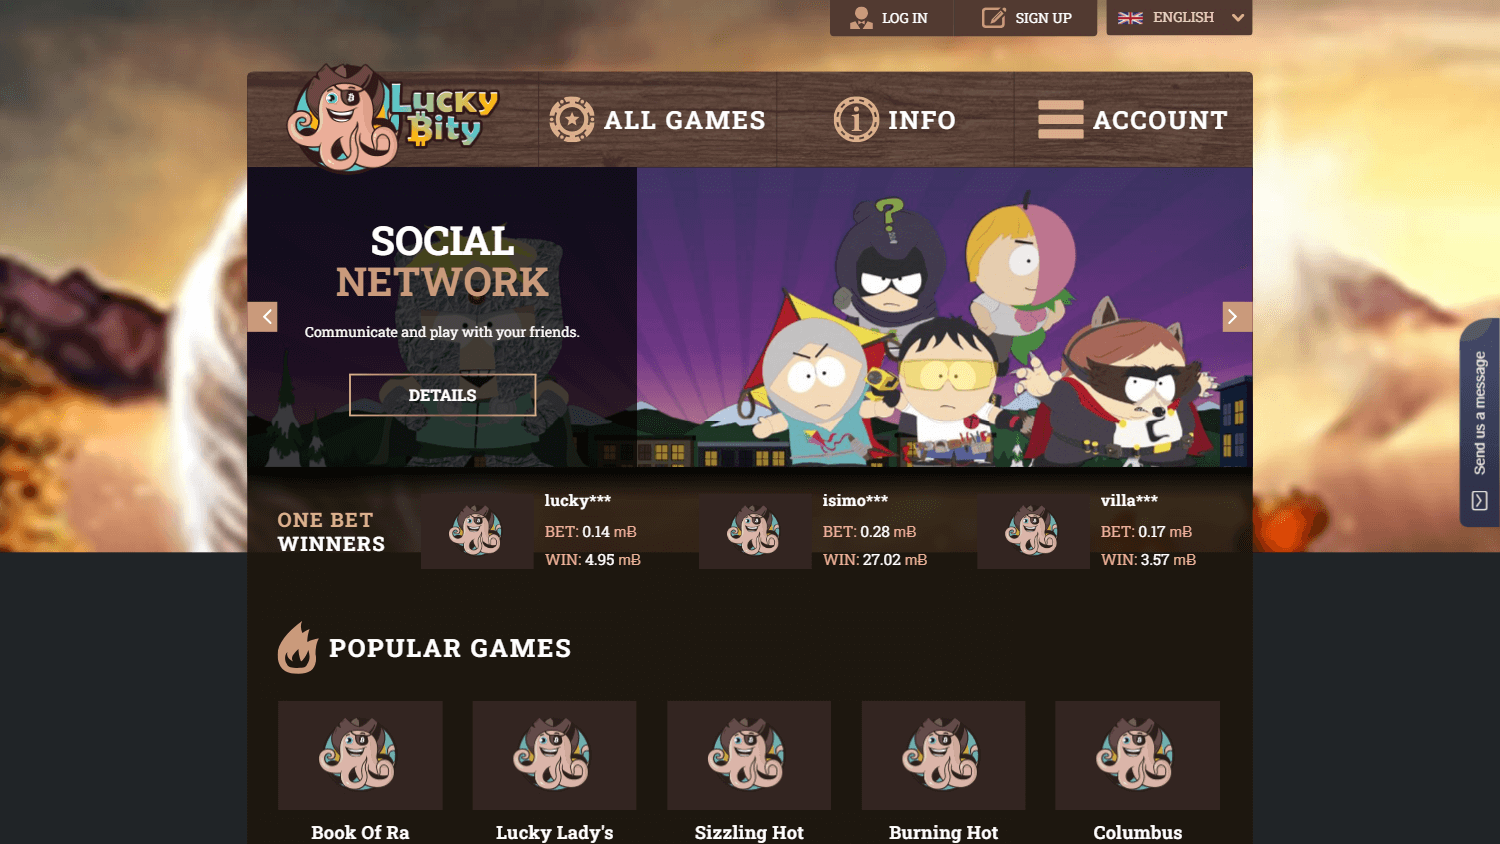 lucky_bity_casino_homepage_desktop